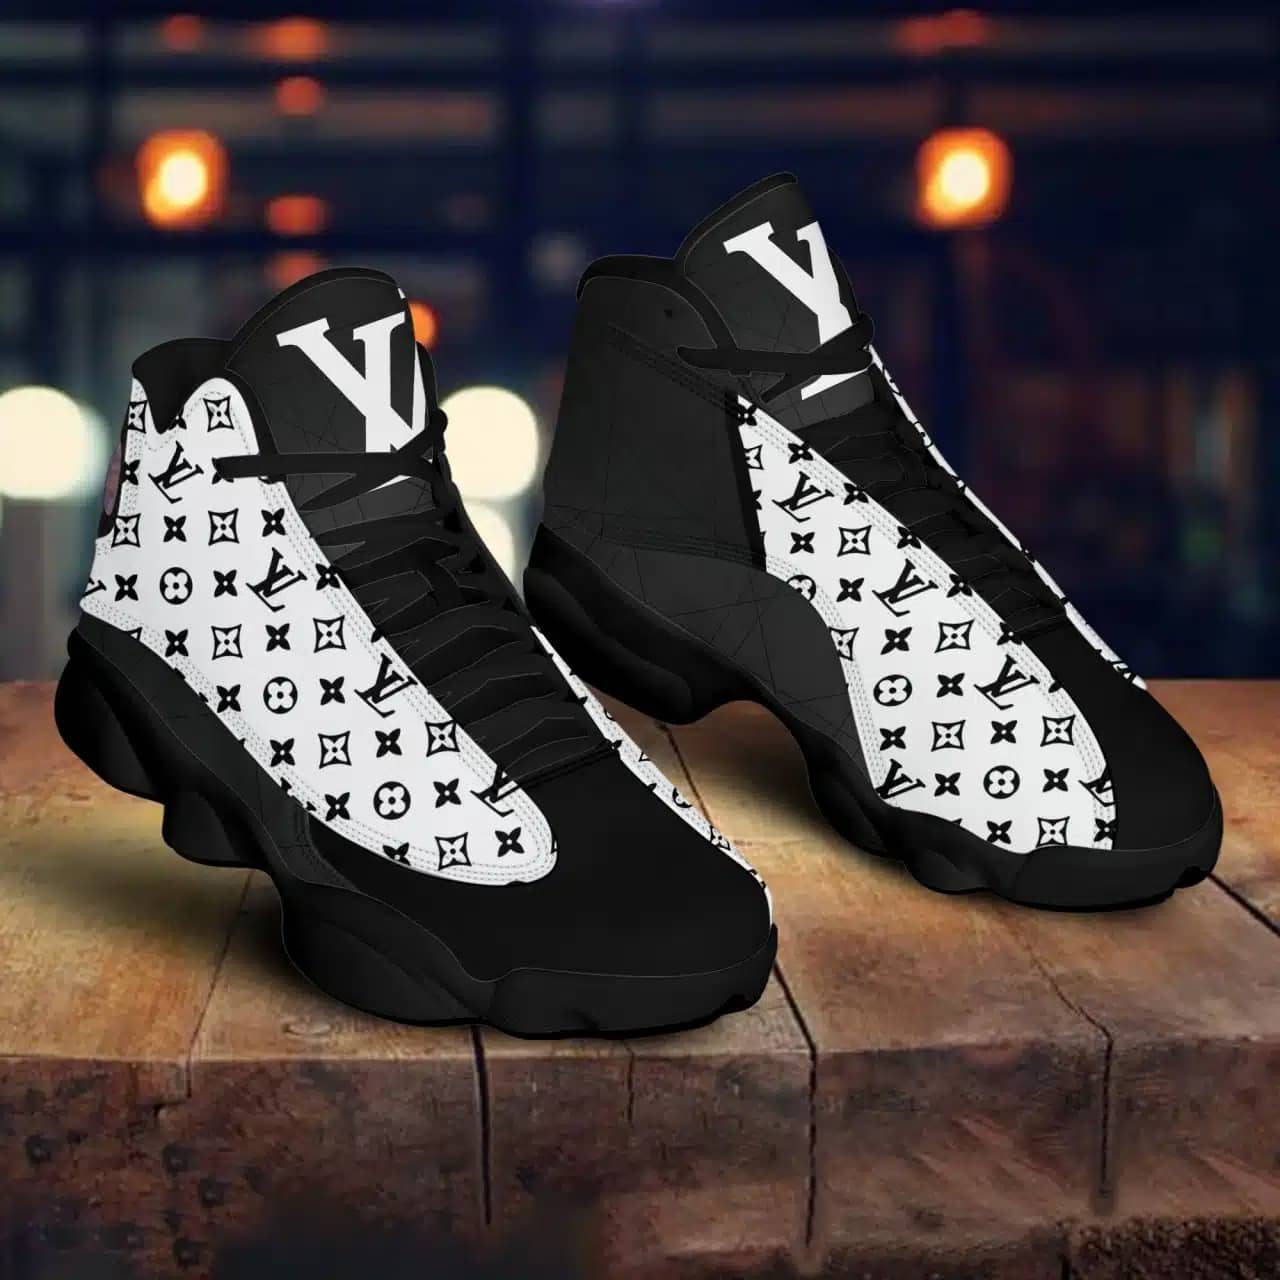 Louis Vuitton Ver 1 Air Jordan 13 Sneaker - It's RobinLoriNOW!